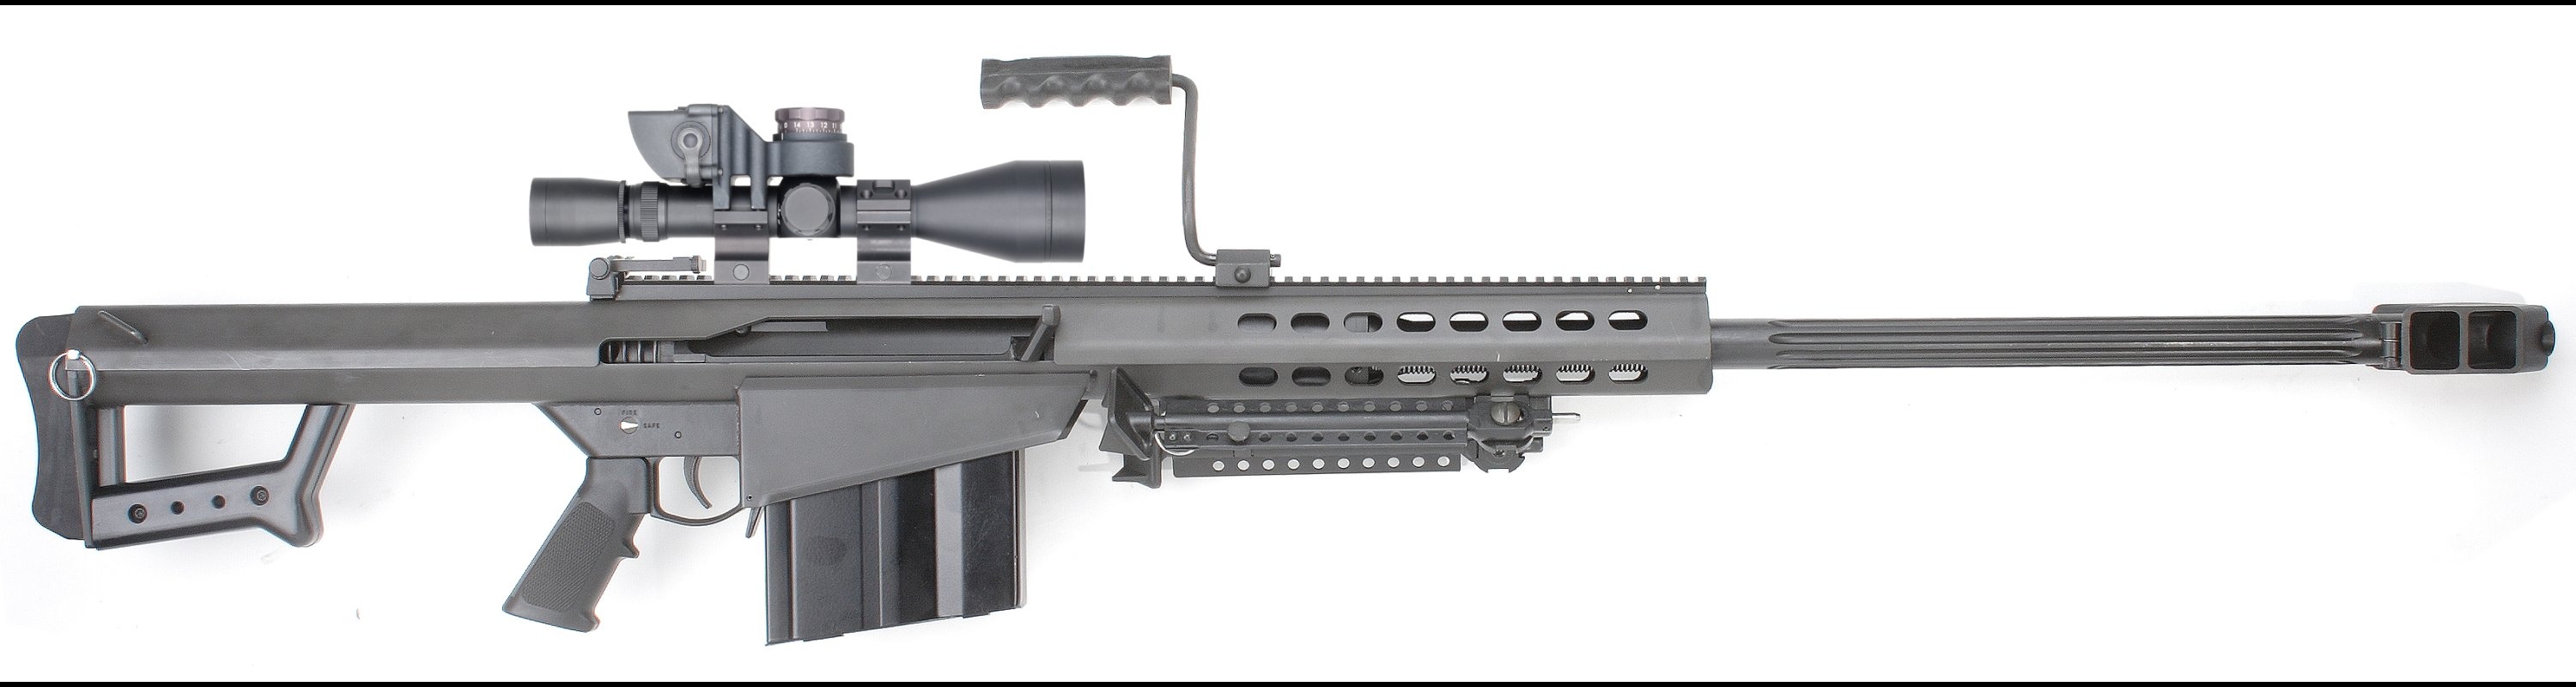 Weapons Barrett M82 Sniper Rifle HD Wallpaper | Background Image